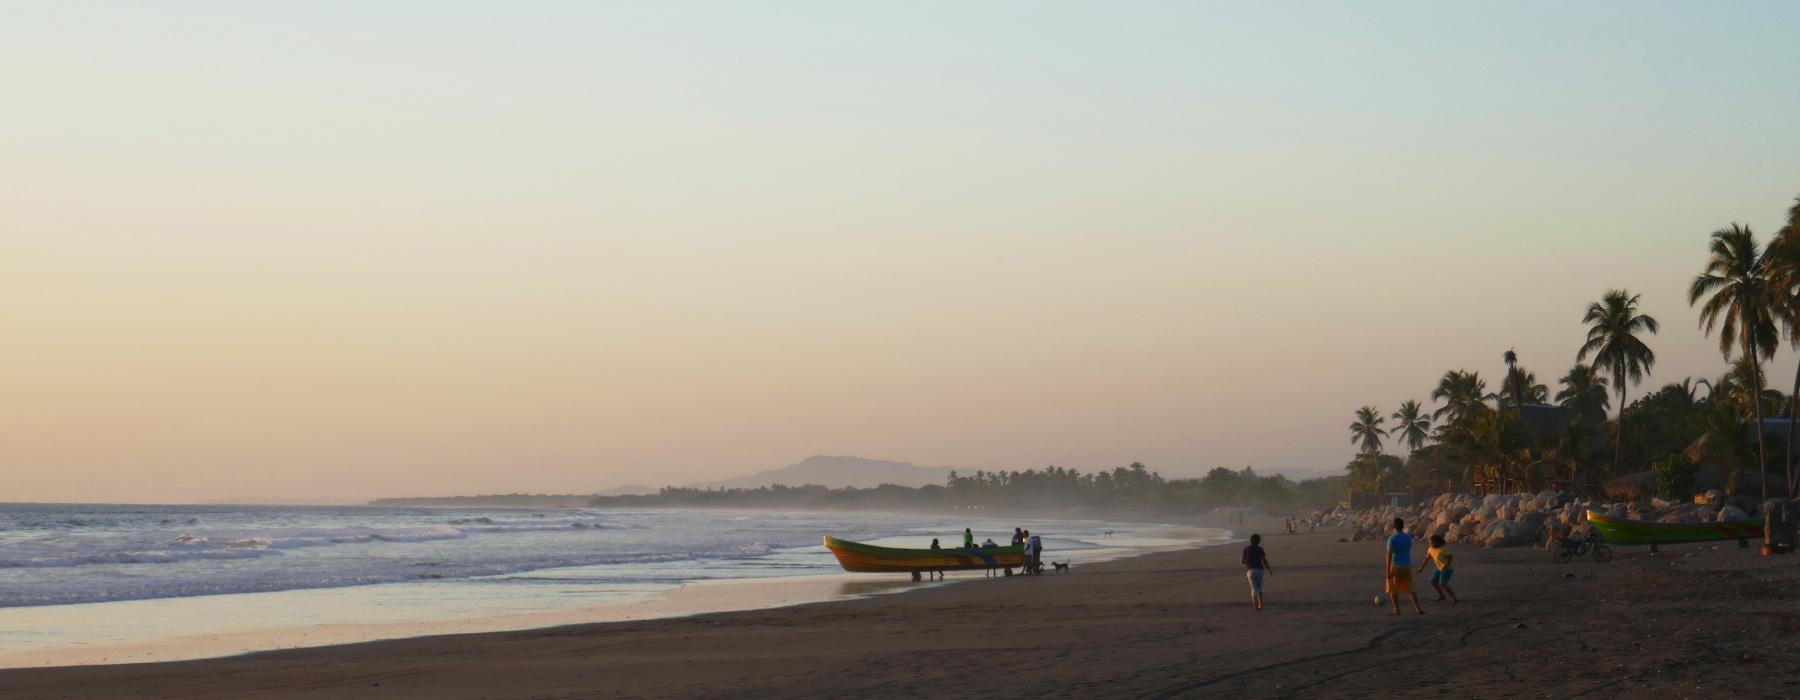 All our Nicaragua<br class="hidden-md hidden-lg" /> Luxury Adventure Holidays